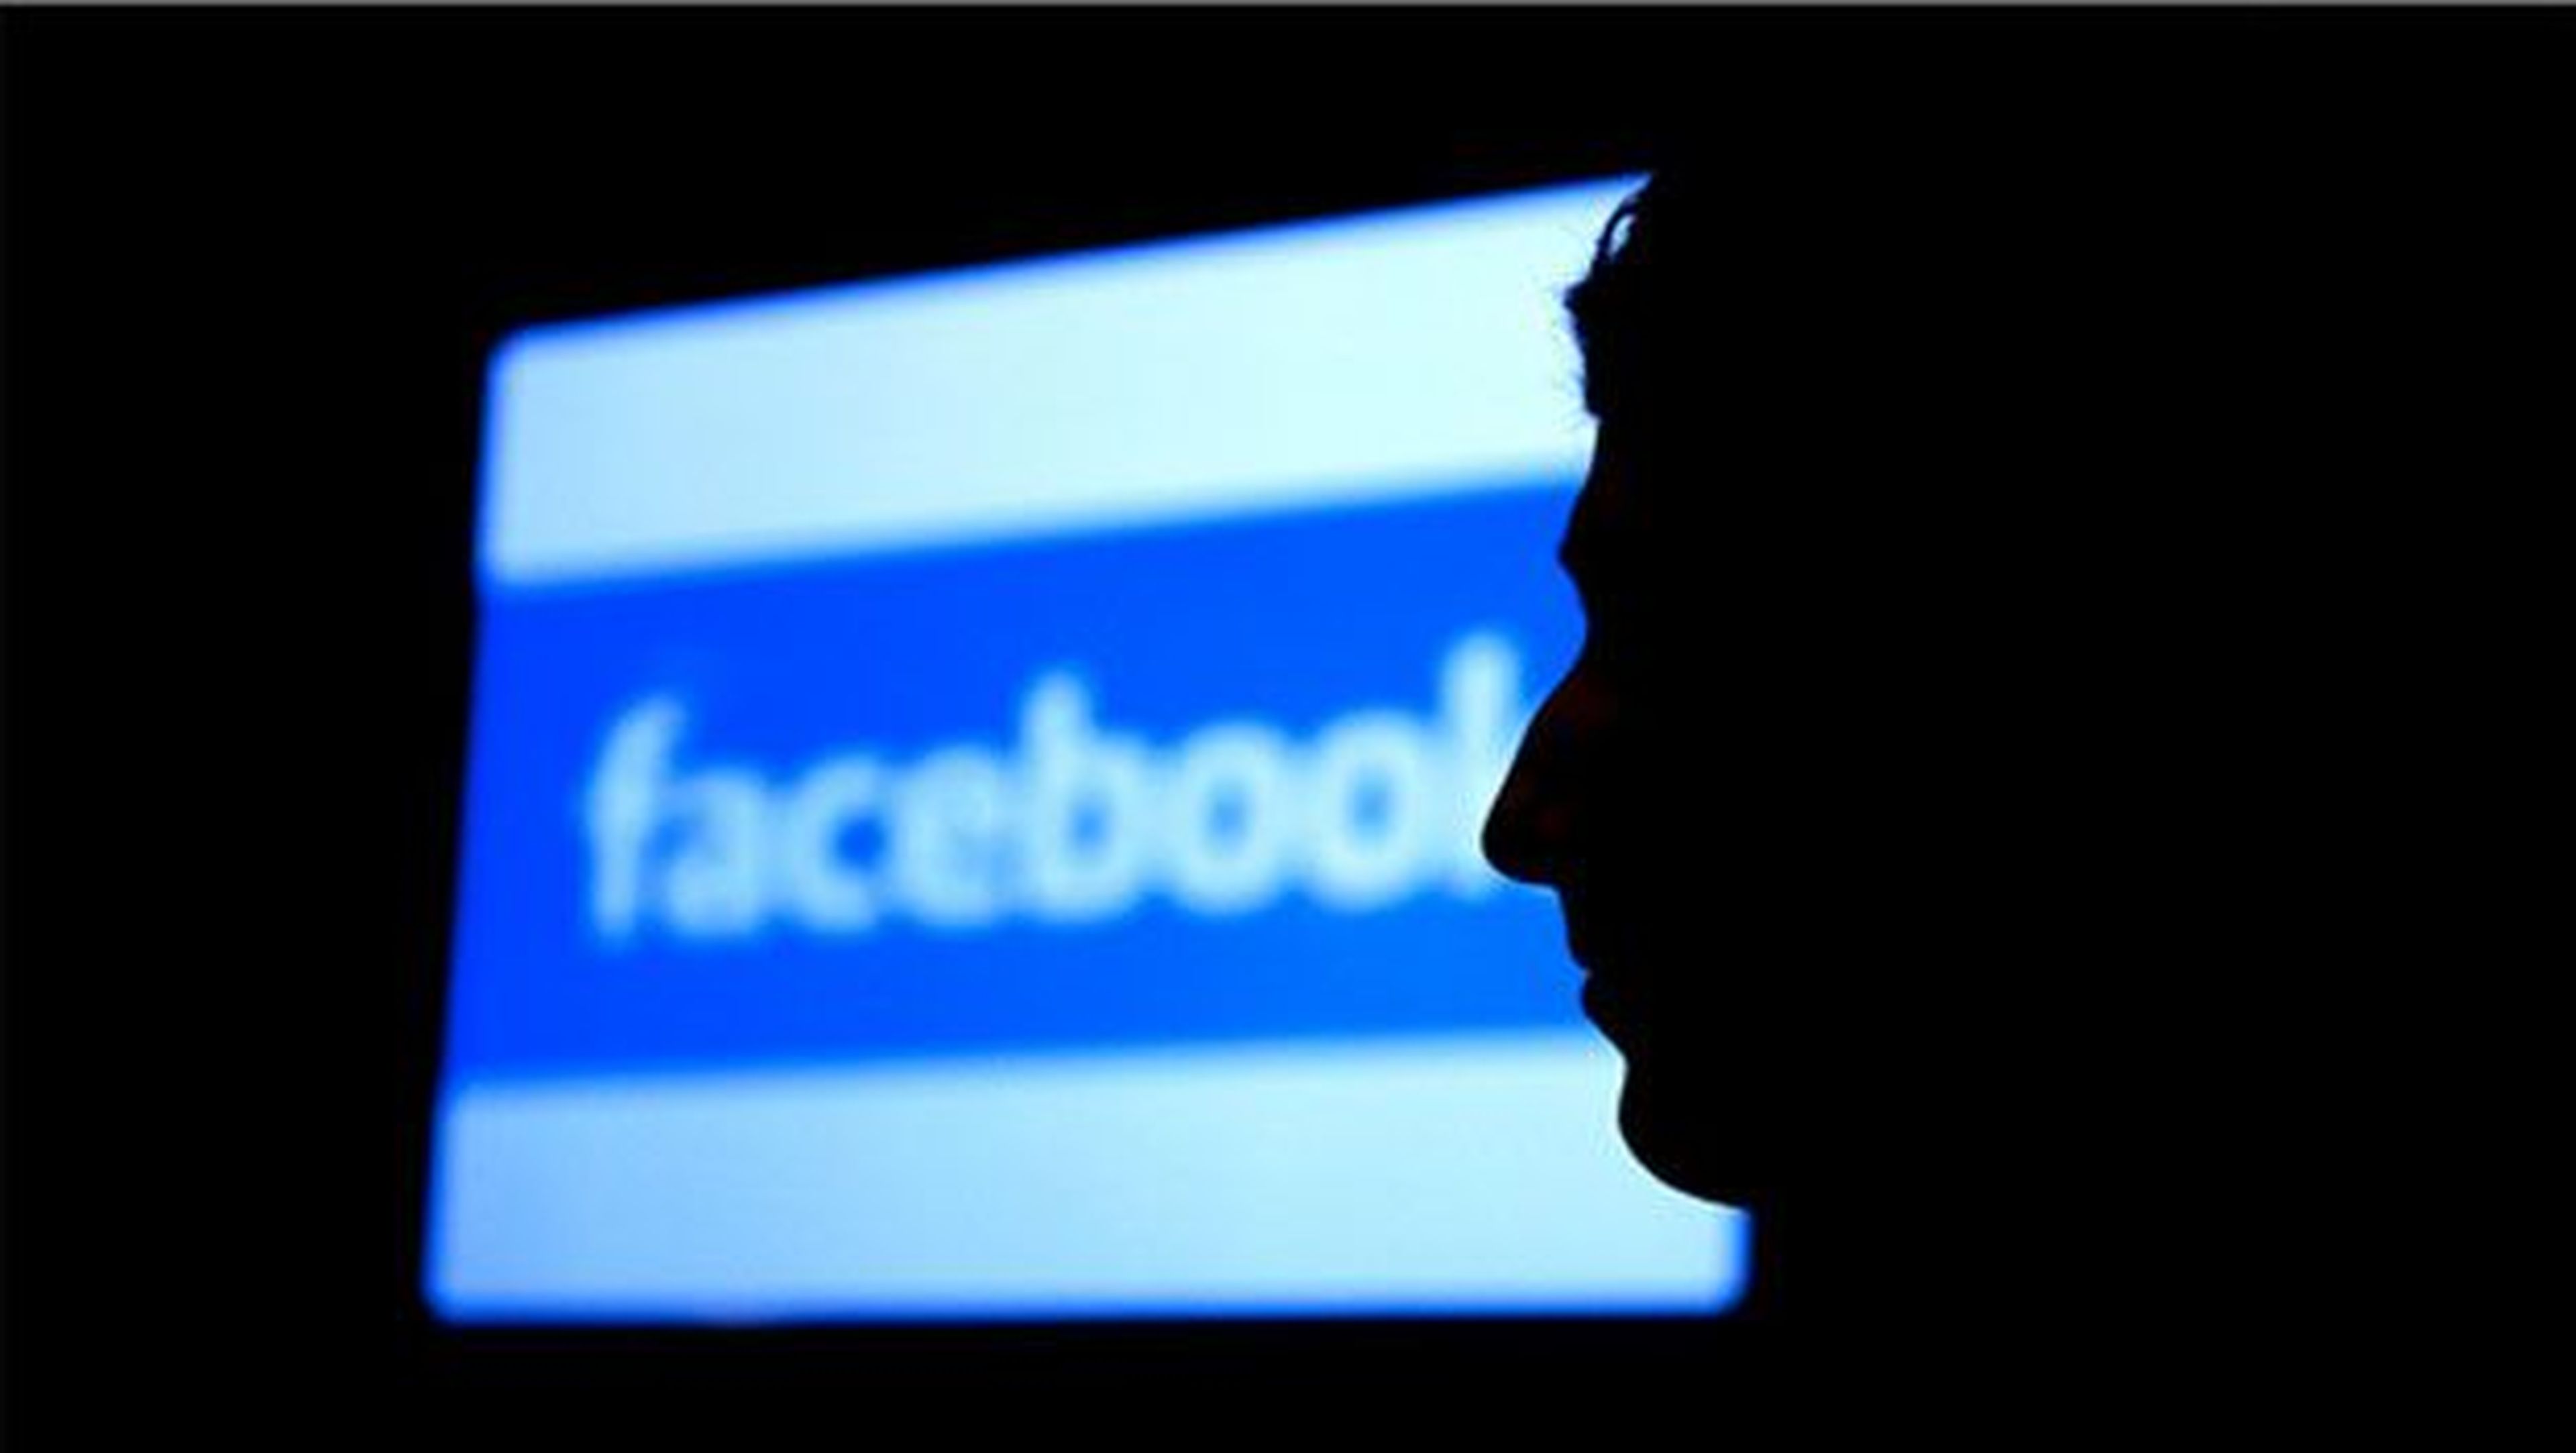 Un fallo en Facebook permite ver fotos privadas de usuarios